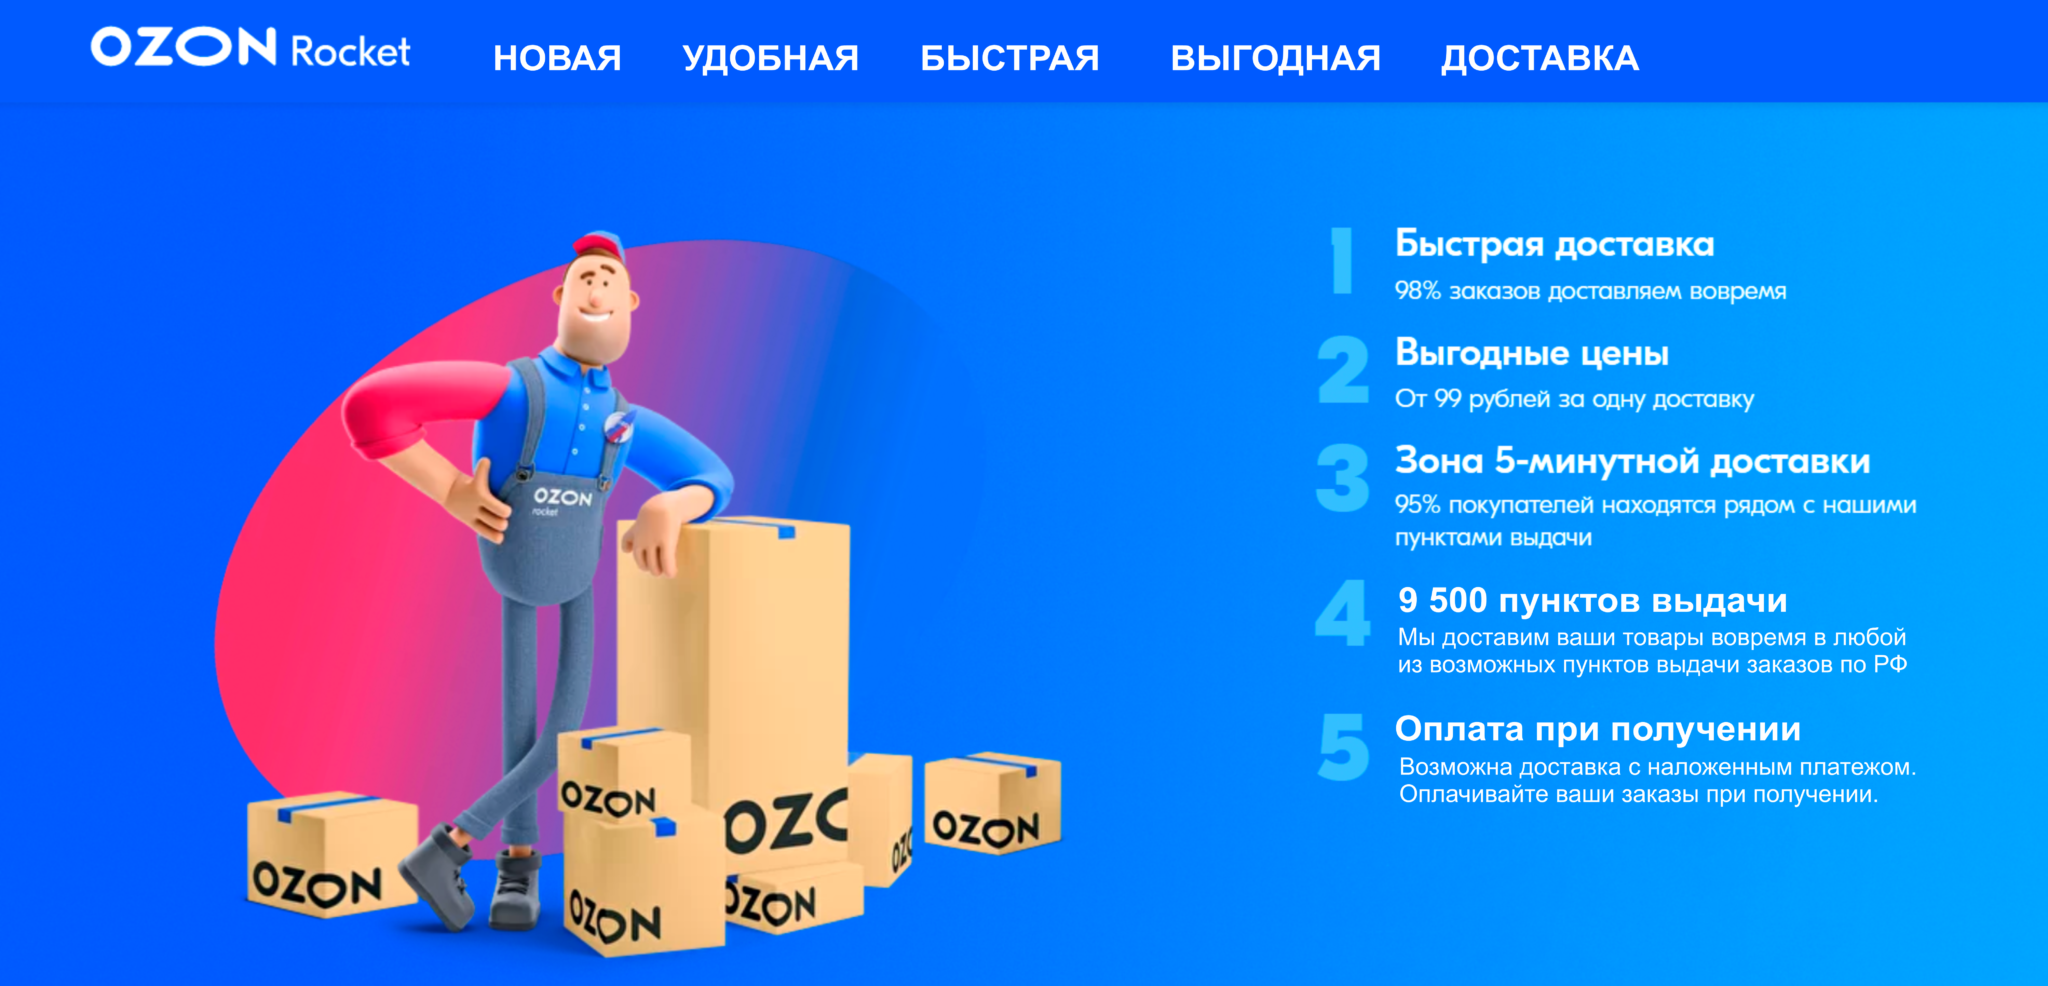 Озон интернет магазин цена доставки. Доставка OZON. Озон рокет. Озон рокет доставка. OZON баннер.